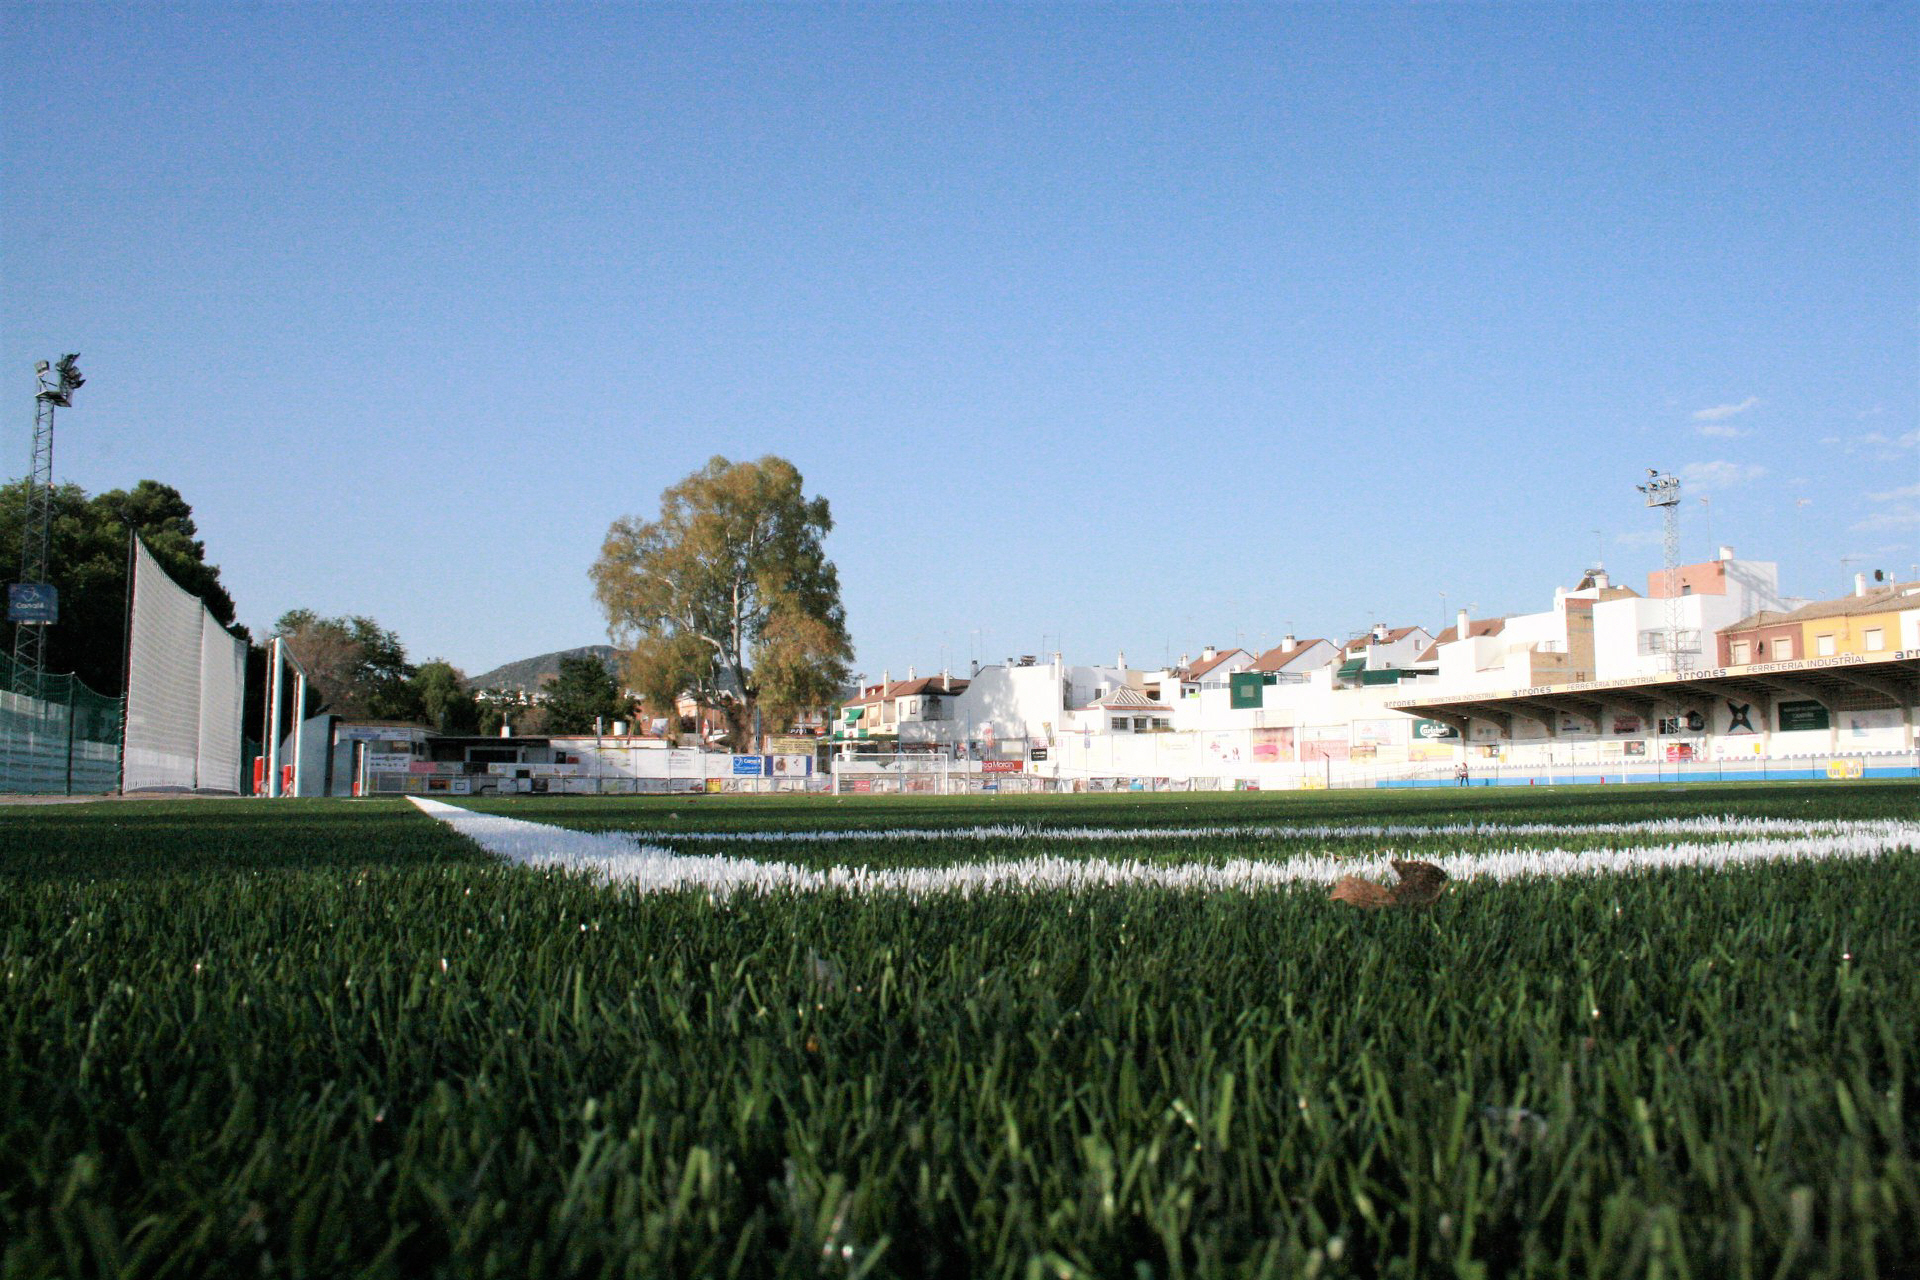  Campo de fútbol Alameda 3